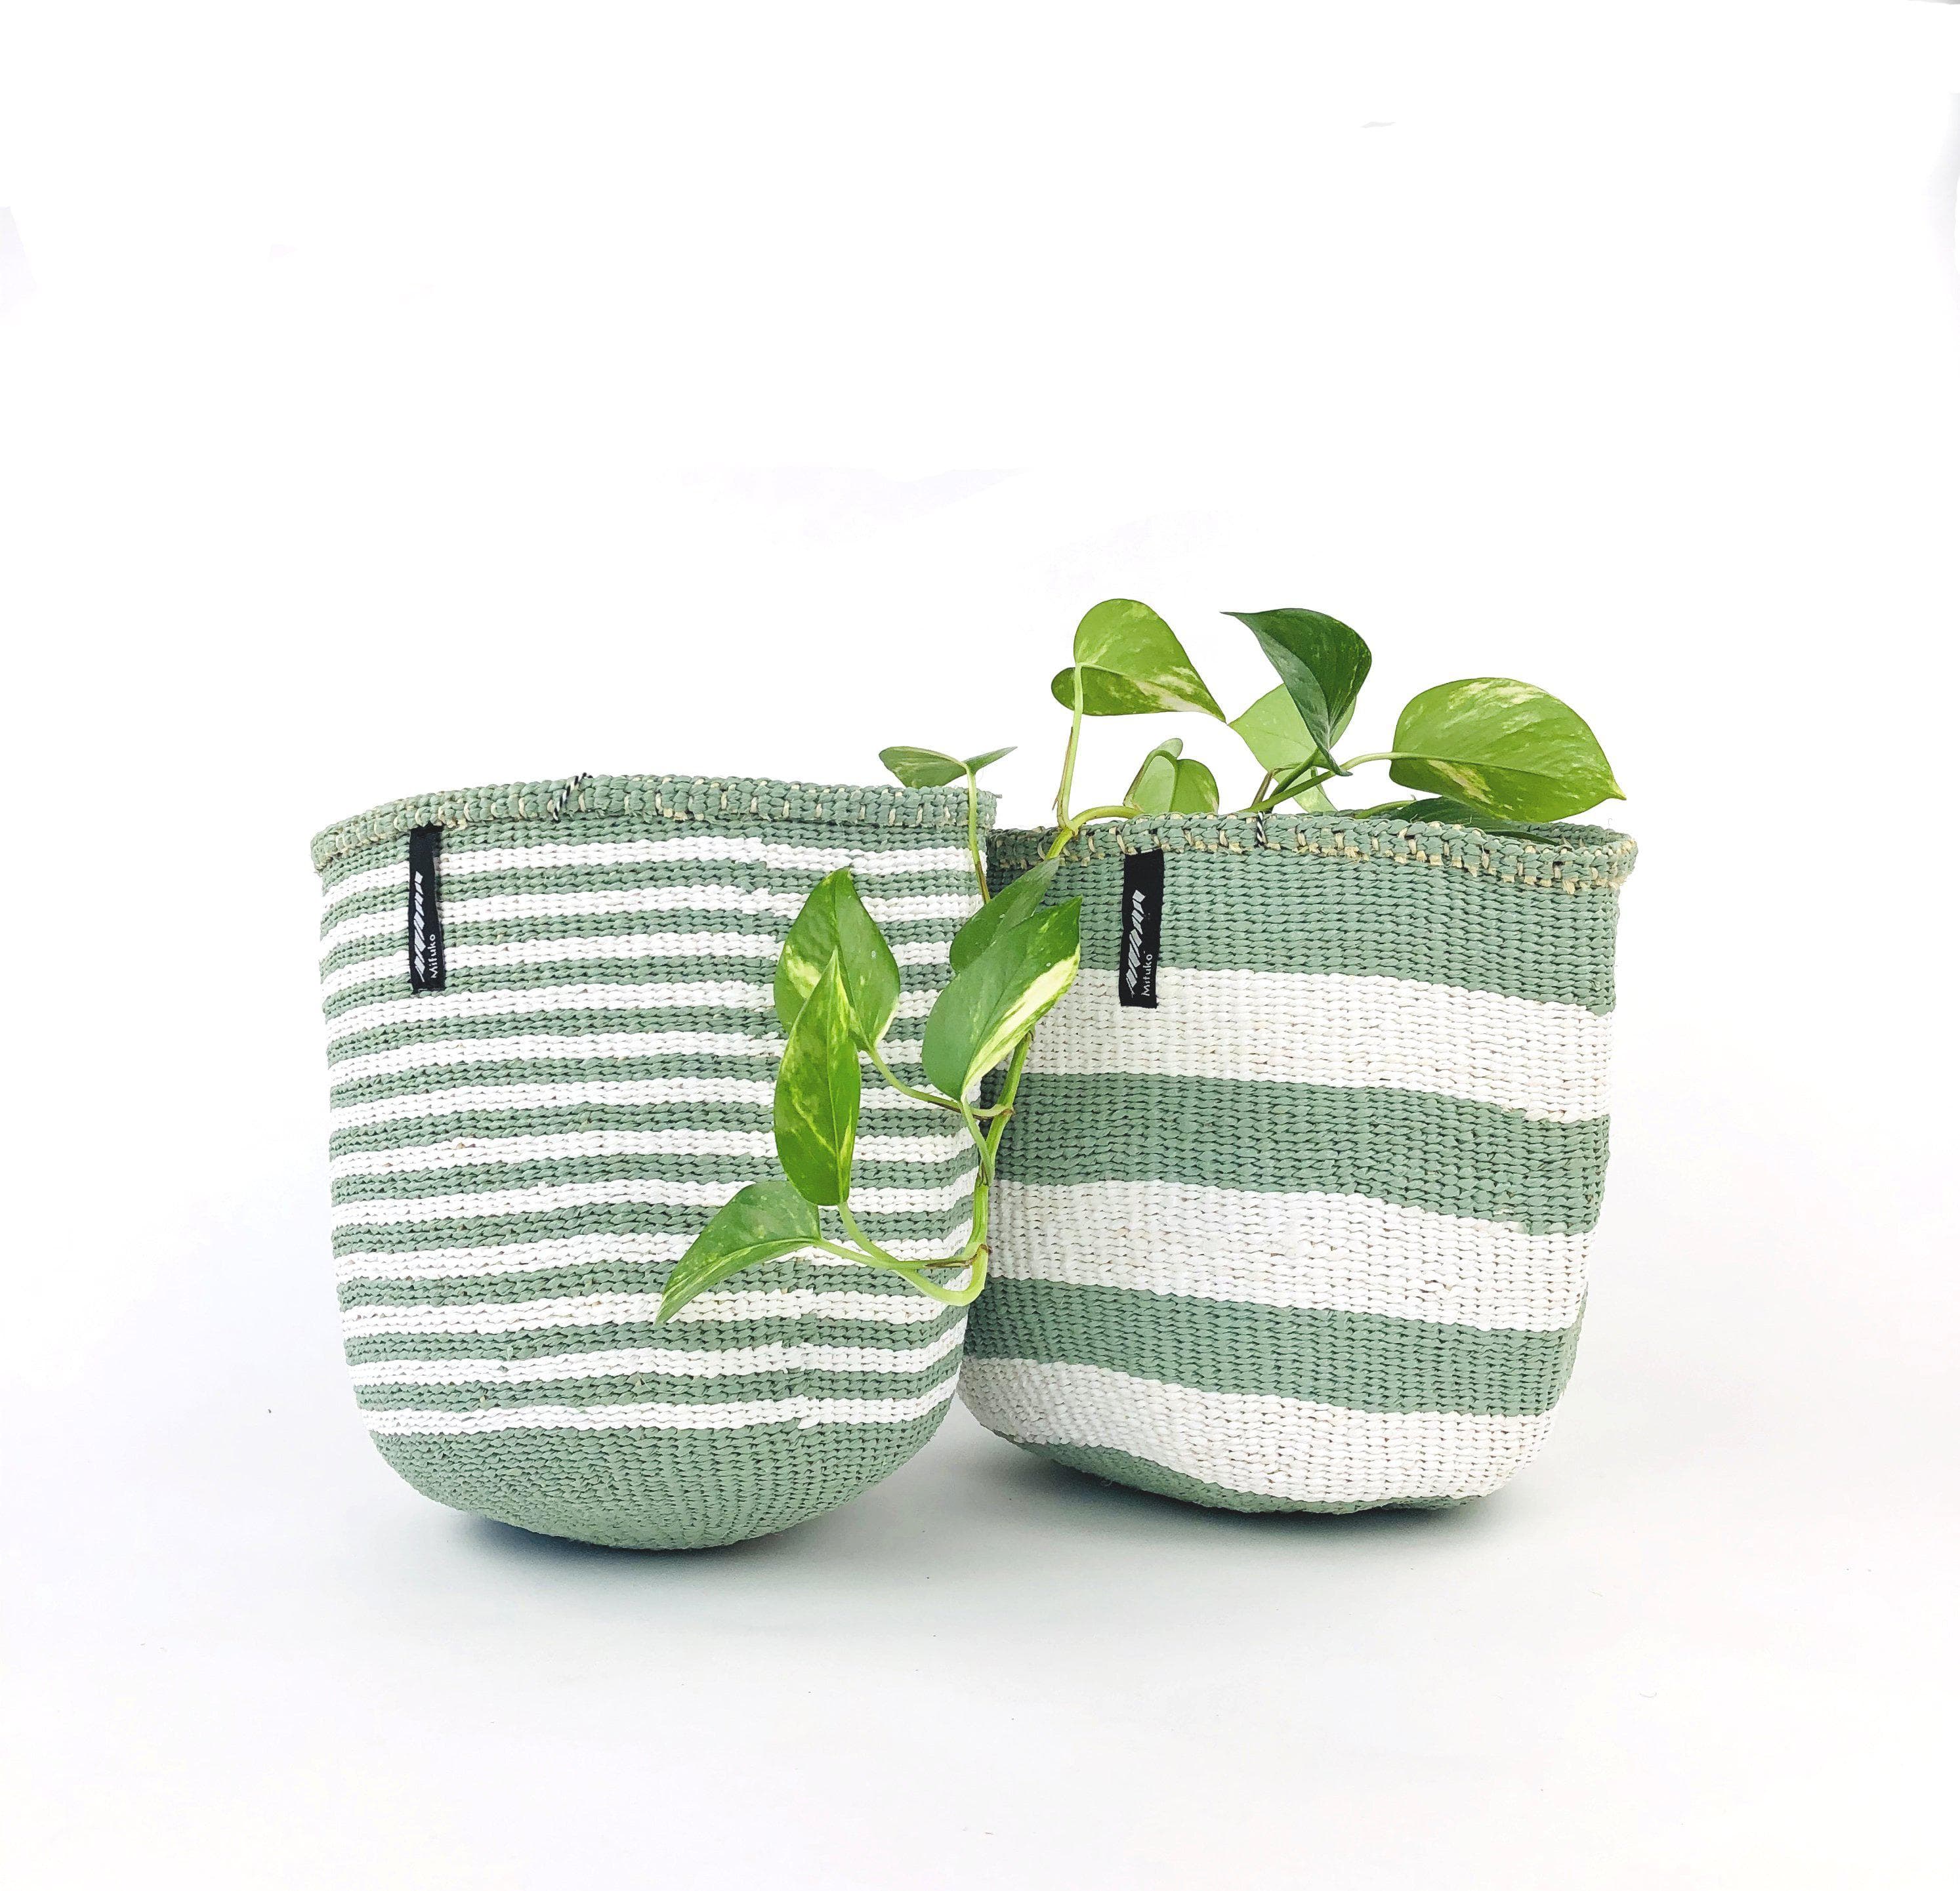 Mifuko Partly recycled plastic and sisal Small basket S Kiondo basket | Thin light green stripes S